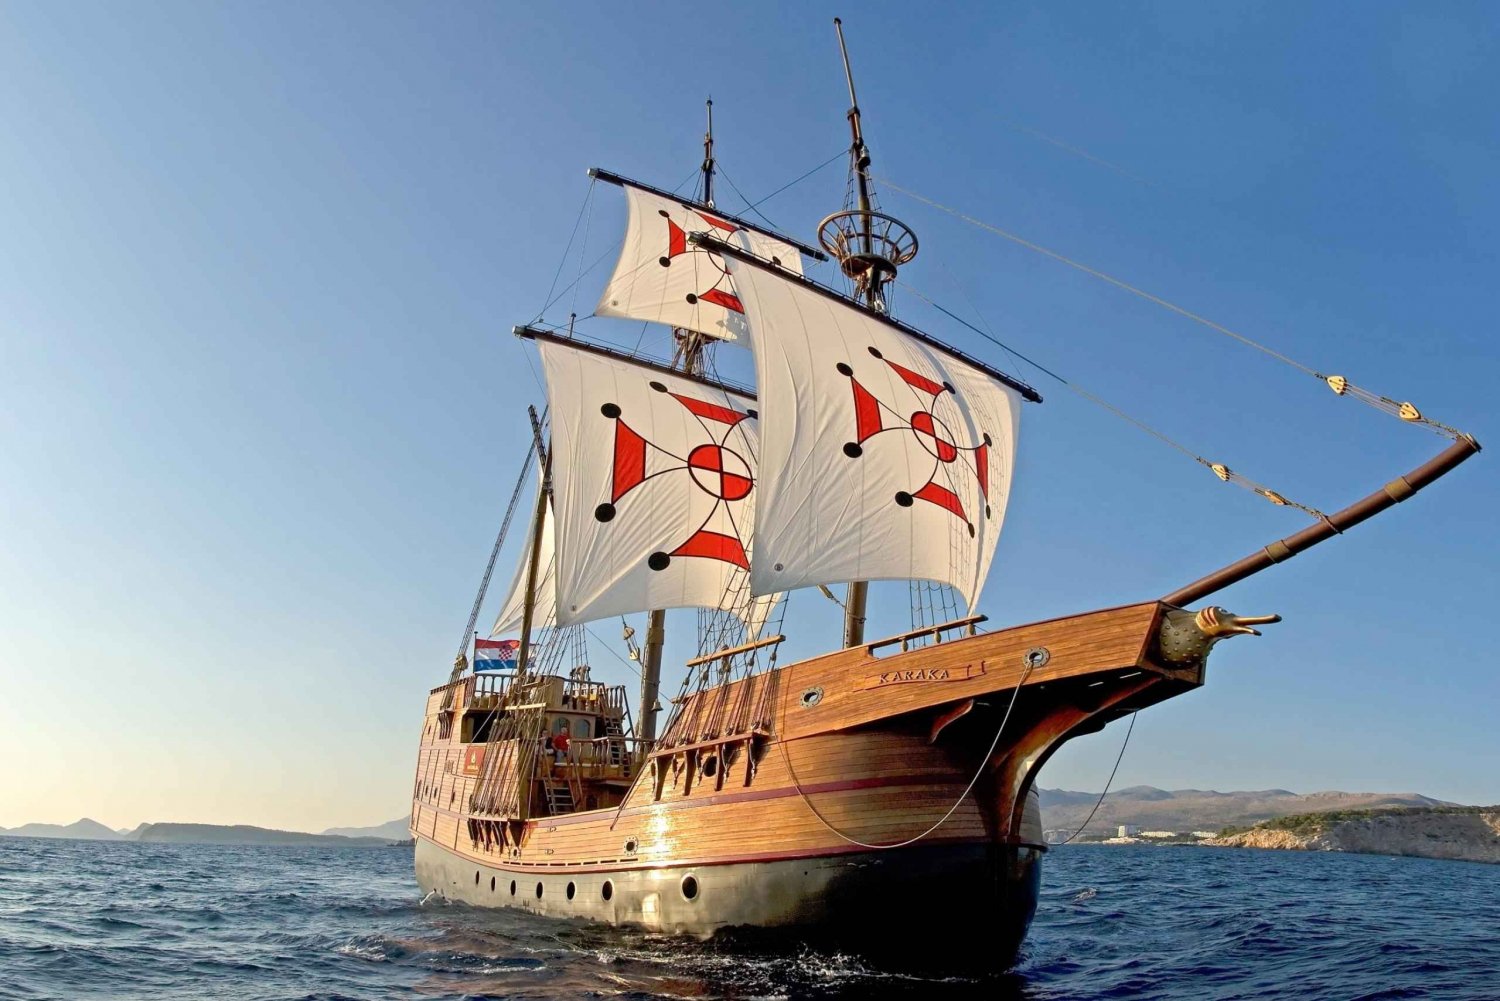 Dubrovnik: Elaphiten-Insel-Hopping-Kreuzfahrt auf dem Karaka-Schiff